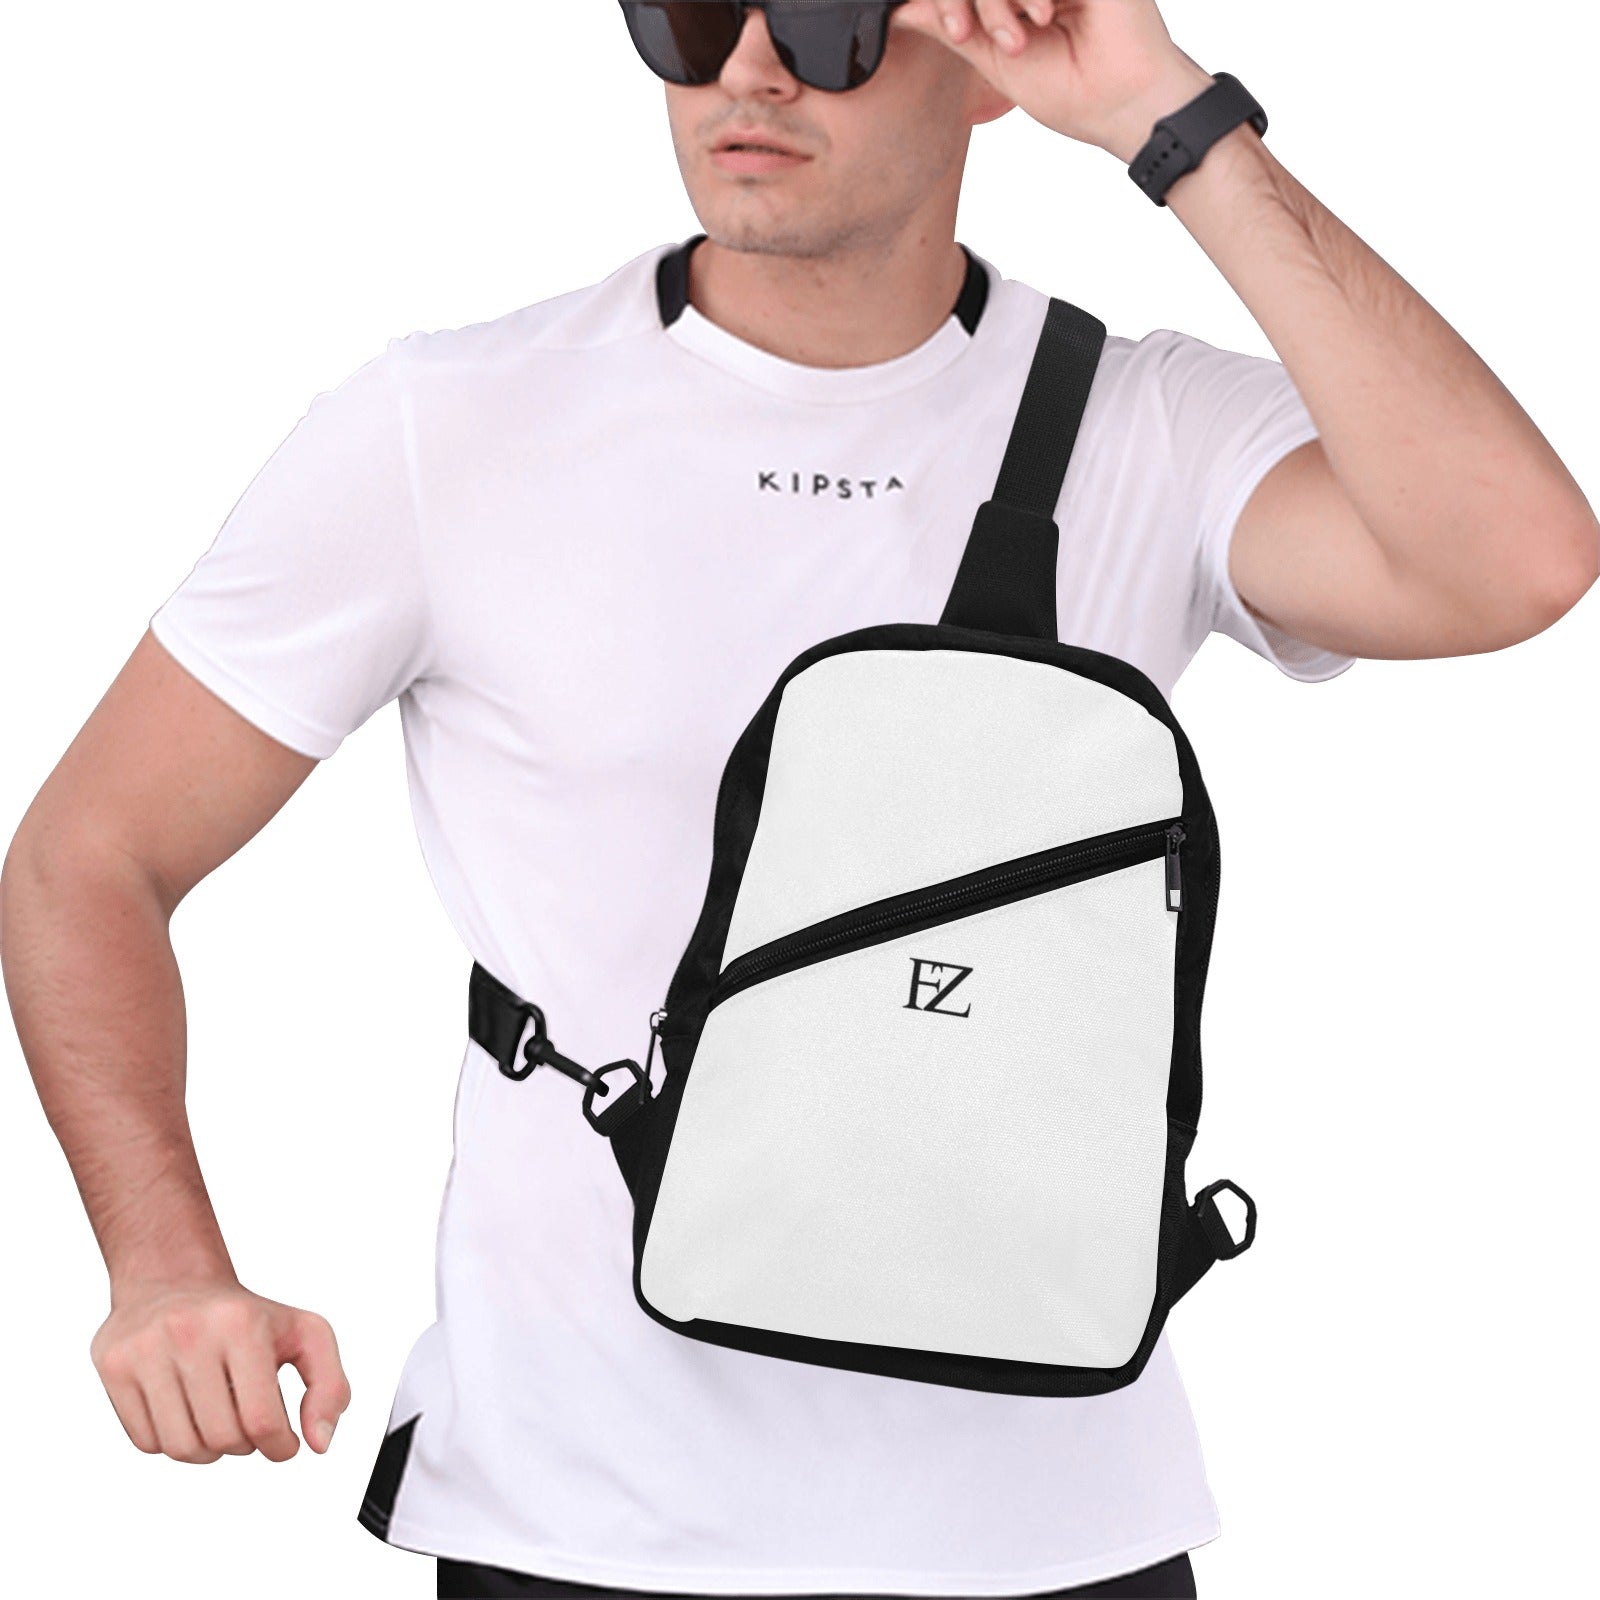 fz men's chest bag one size / fz chest bag-white men's chest bag (model1726)